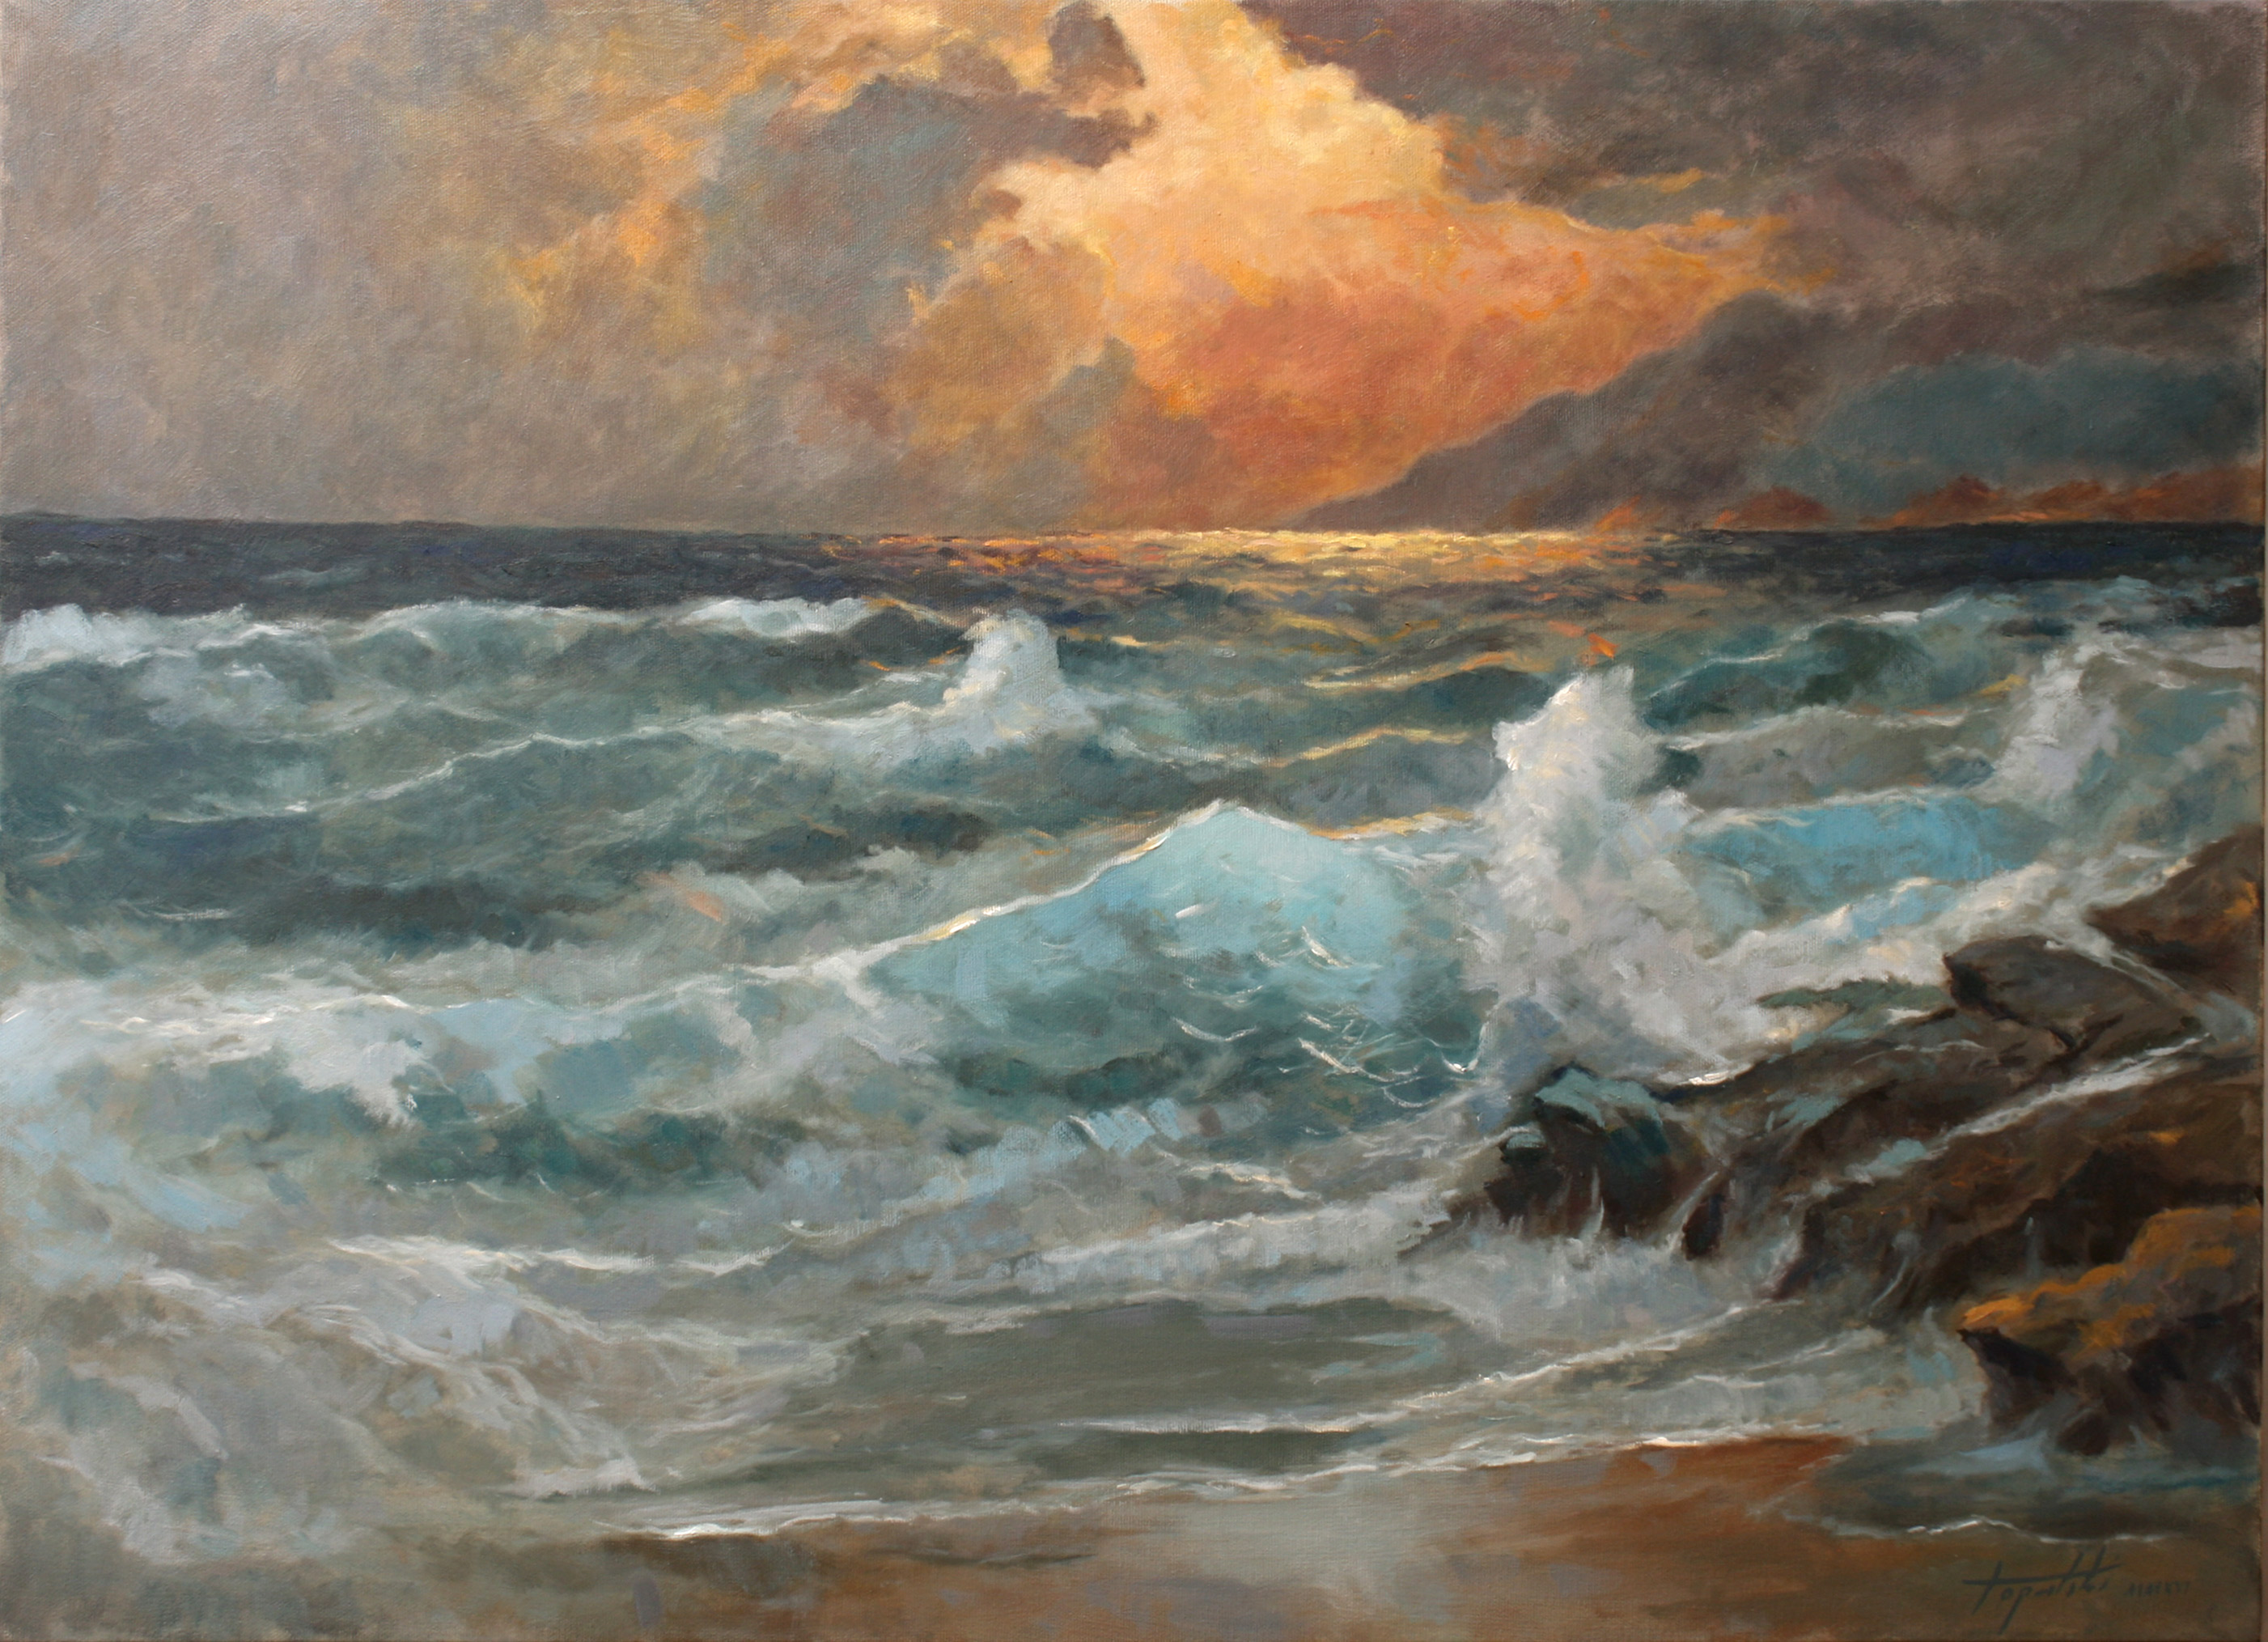 Fine Art Eventide Sea And Waves Original Oil Painting On Canvas By Artist Darko Topalski1 